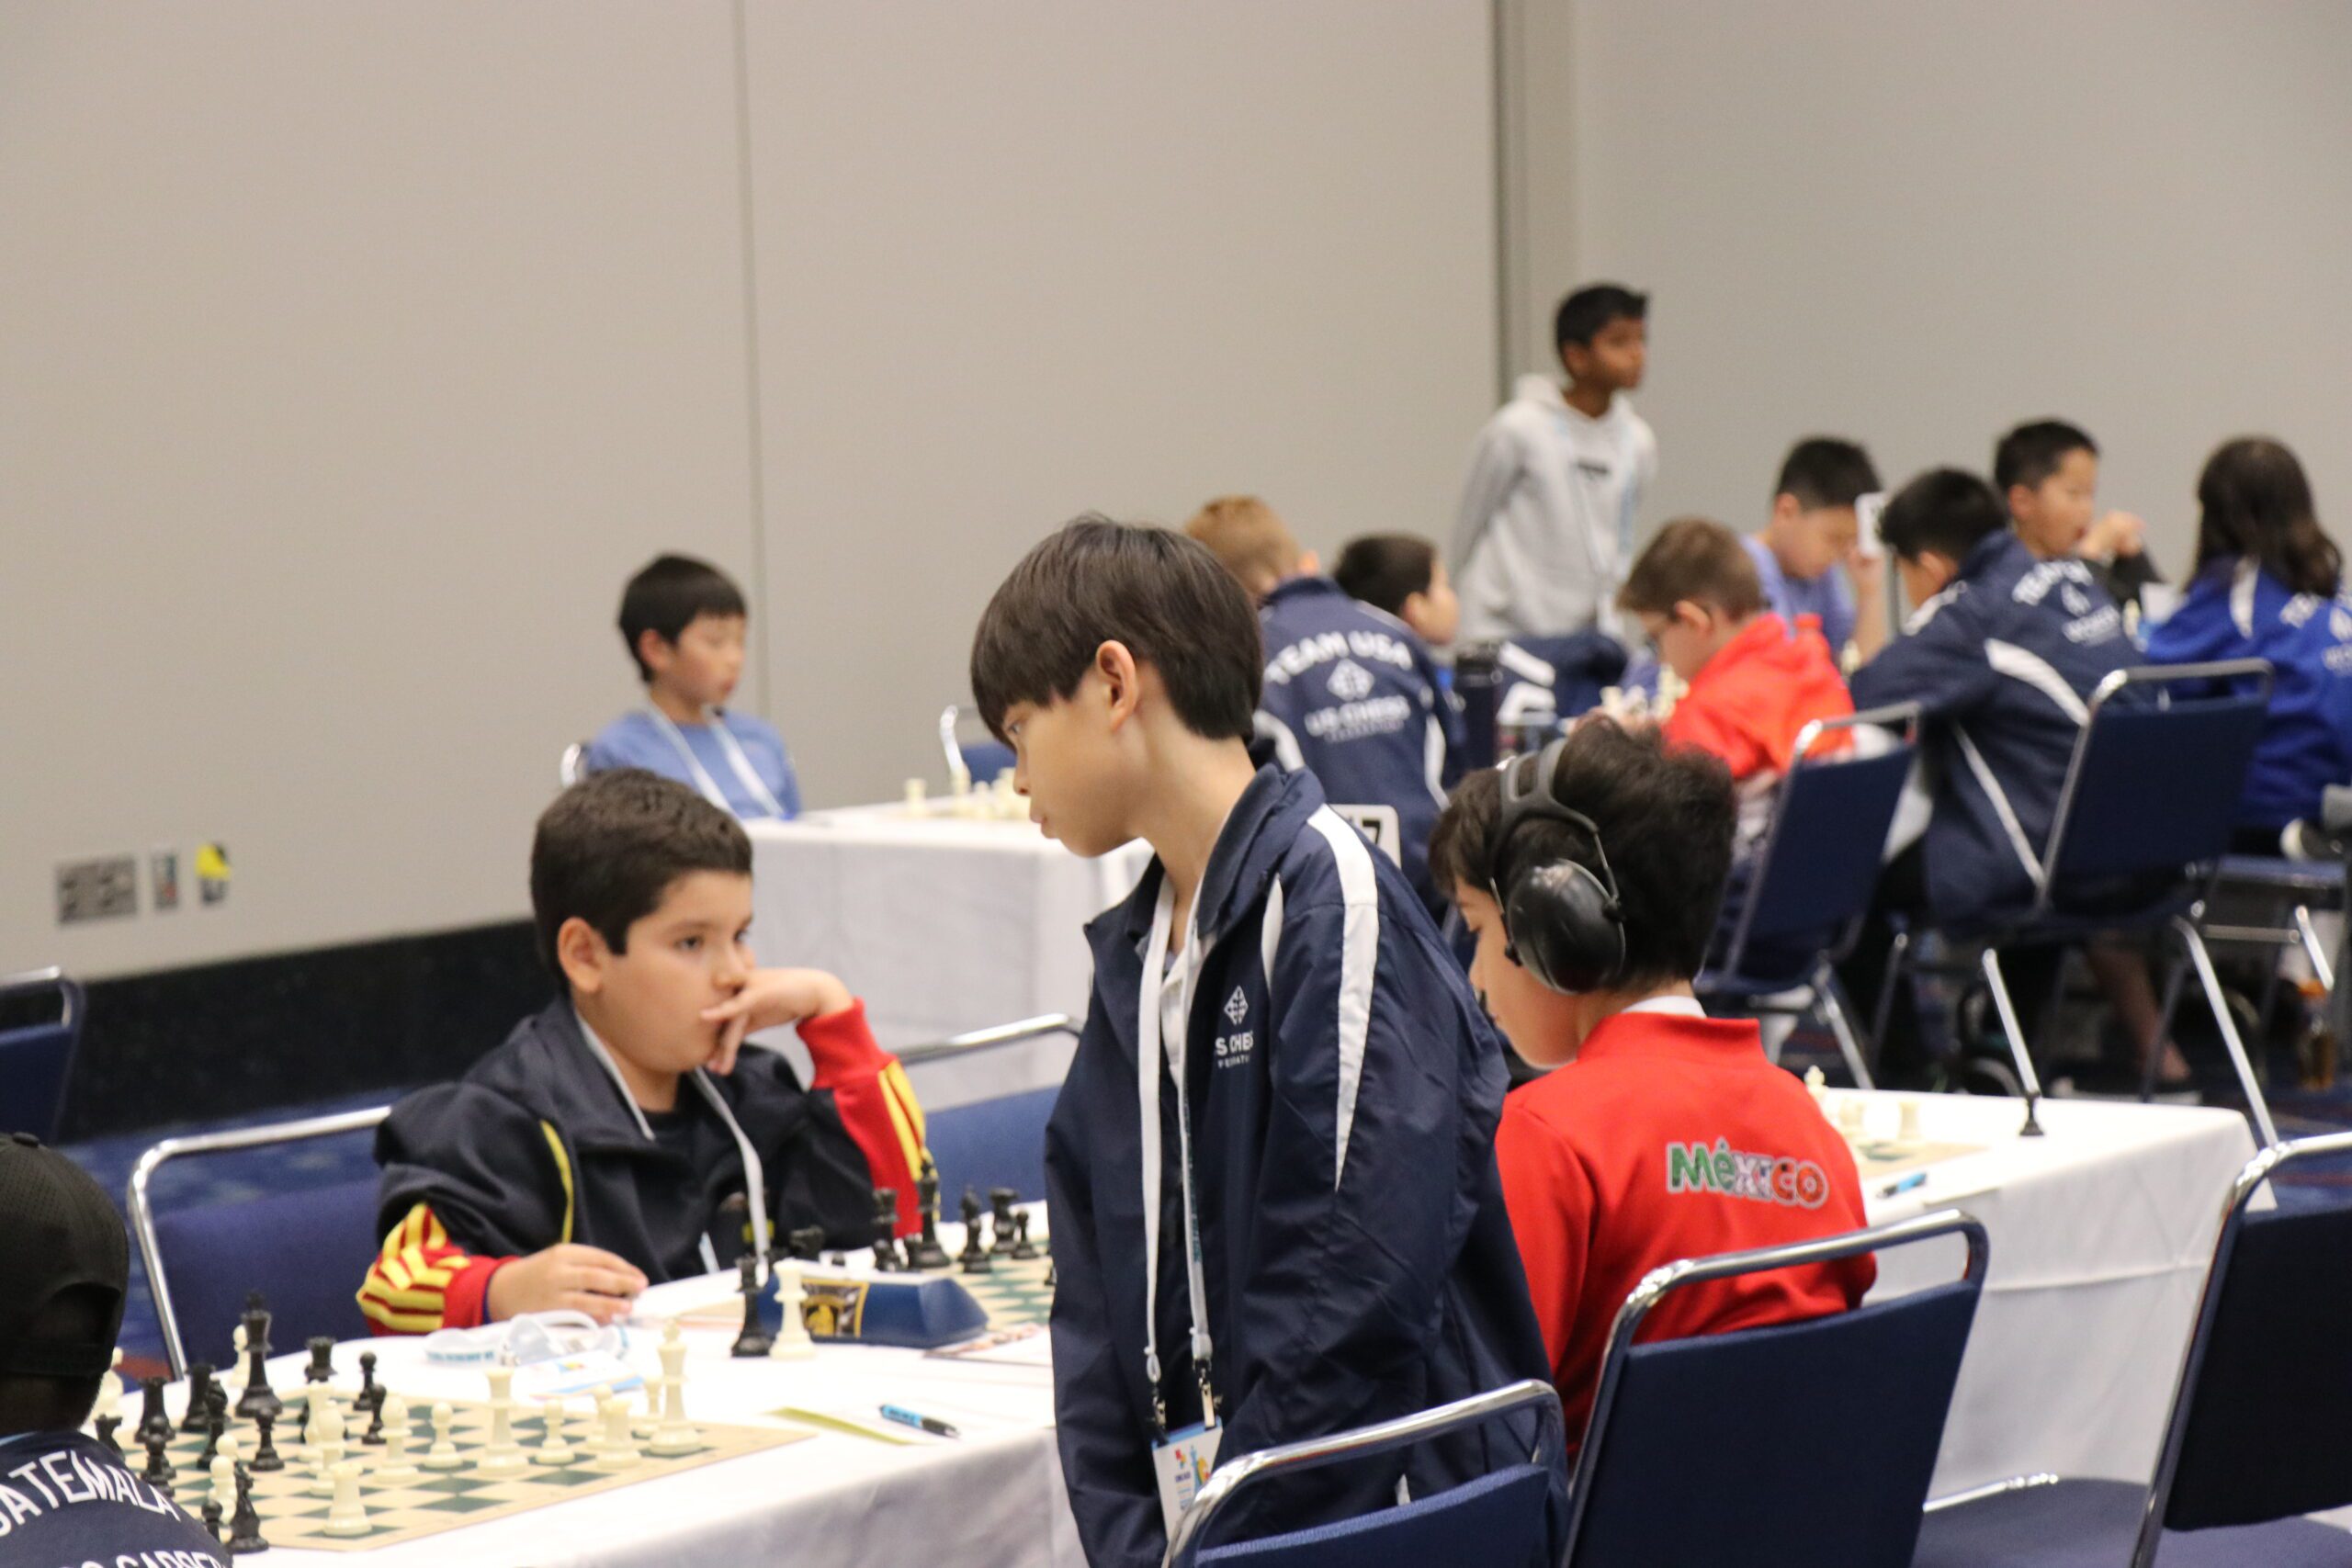 Chess Travel: Pan-American Youth Chess Championship, Brazil again!